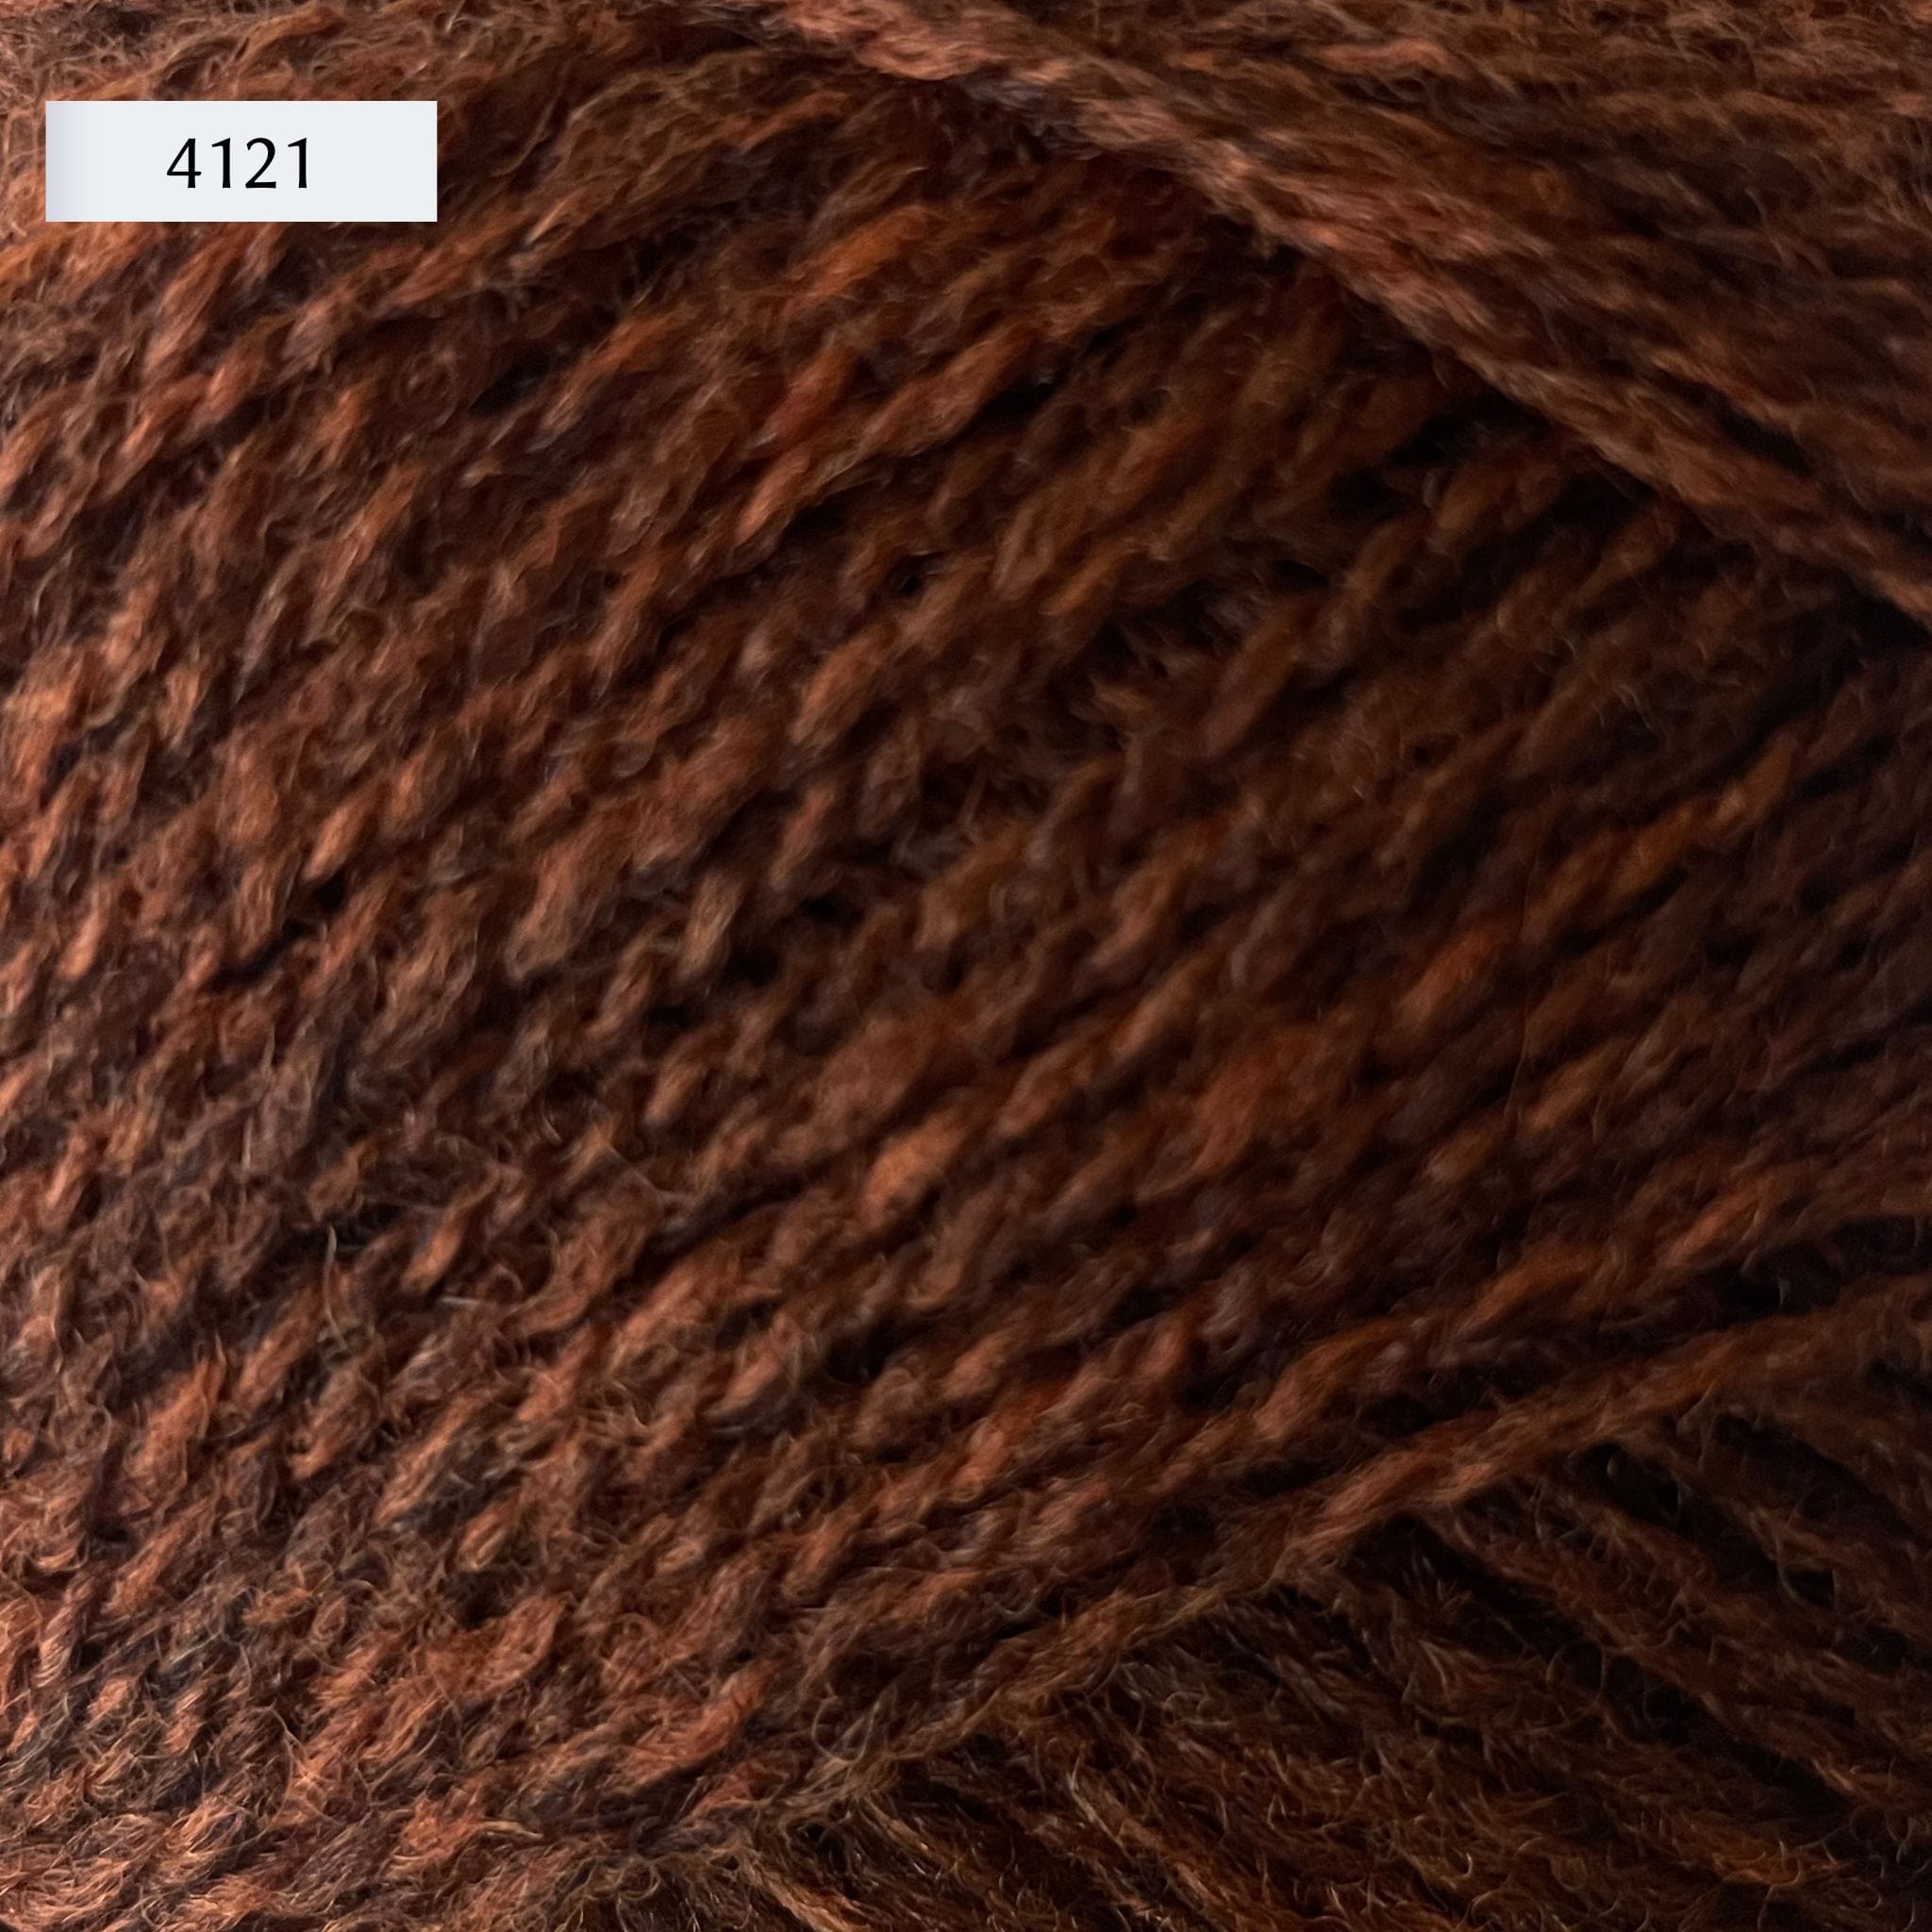 Rauma Finullgarn, a fingering/sport weight yarn, in color 4121, a heathered chocolate brown